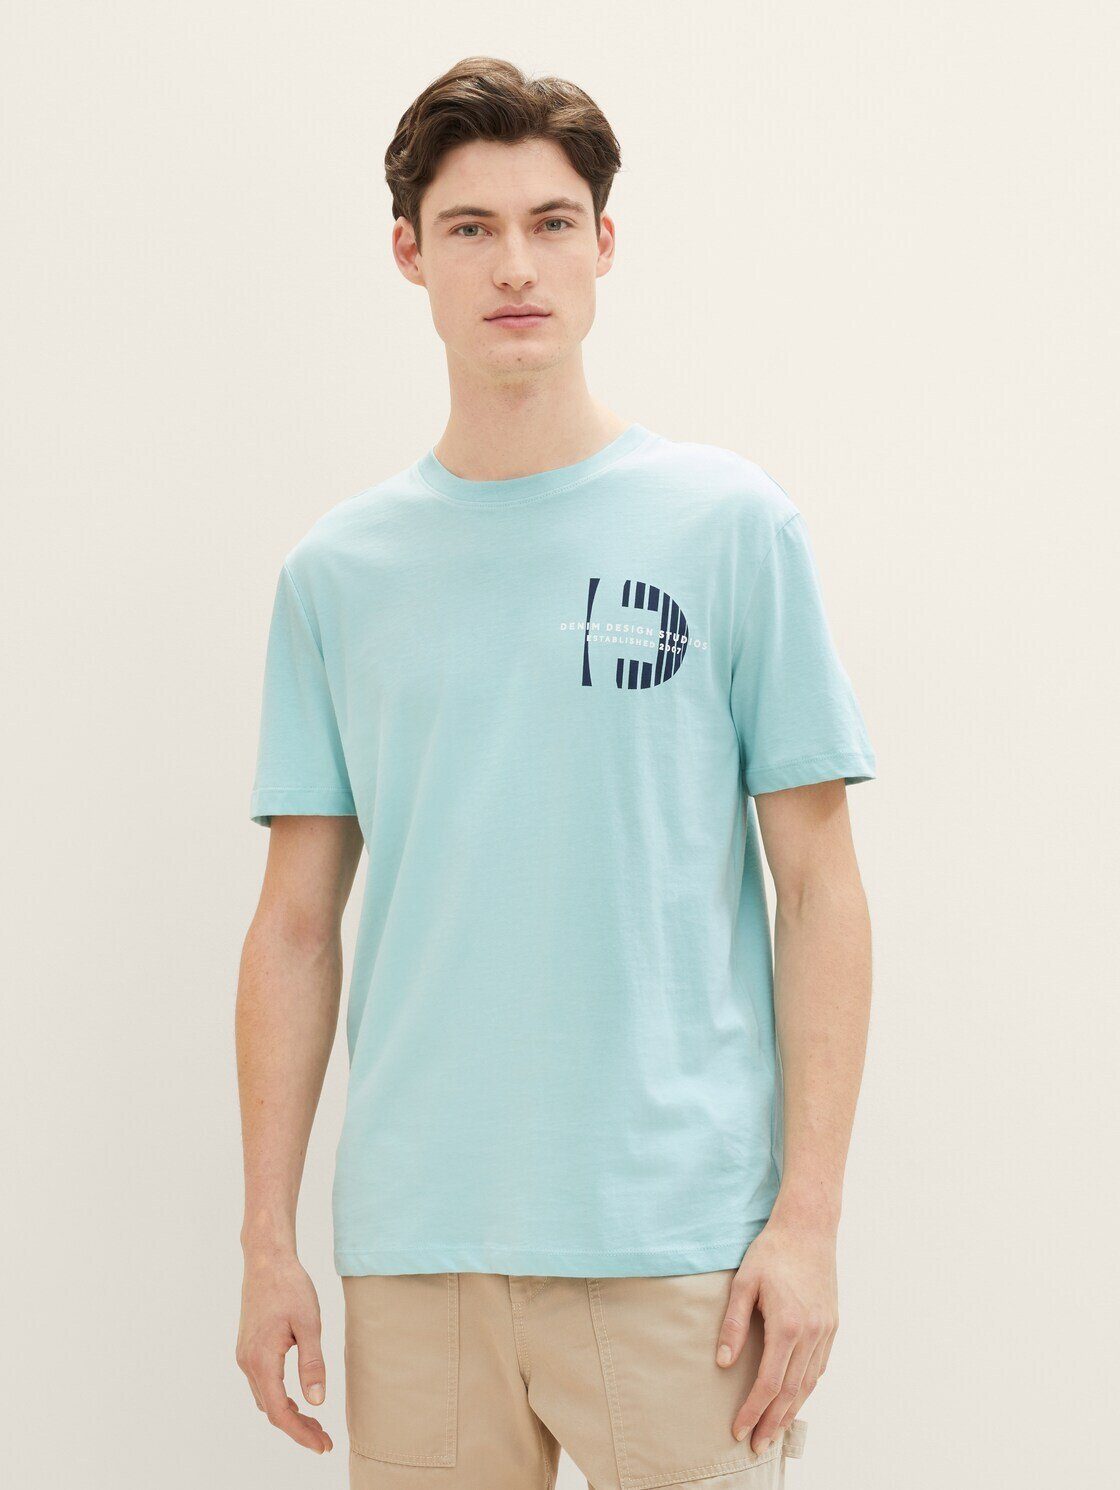 T-Shirt TAILOR turquoise TOM pastel T-Shirt Denim Print mit